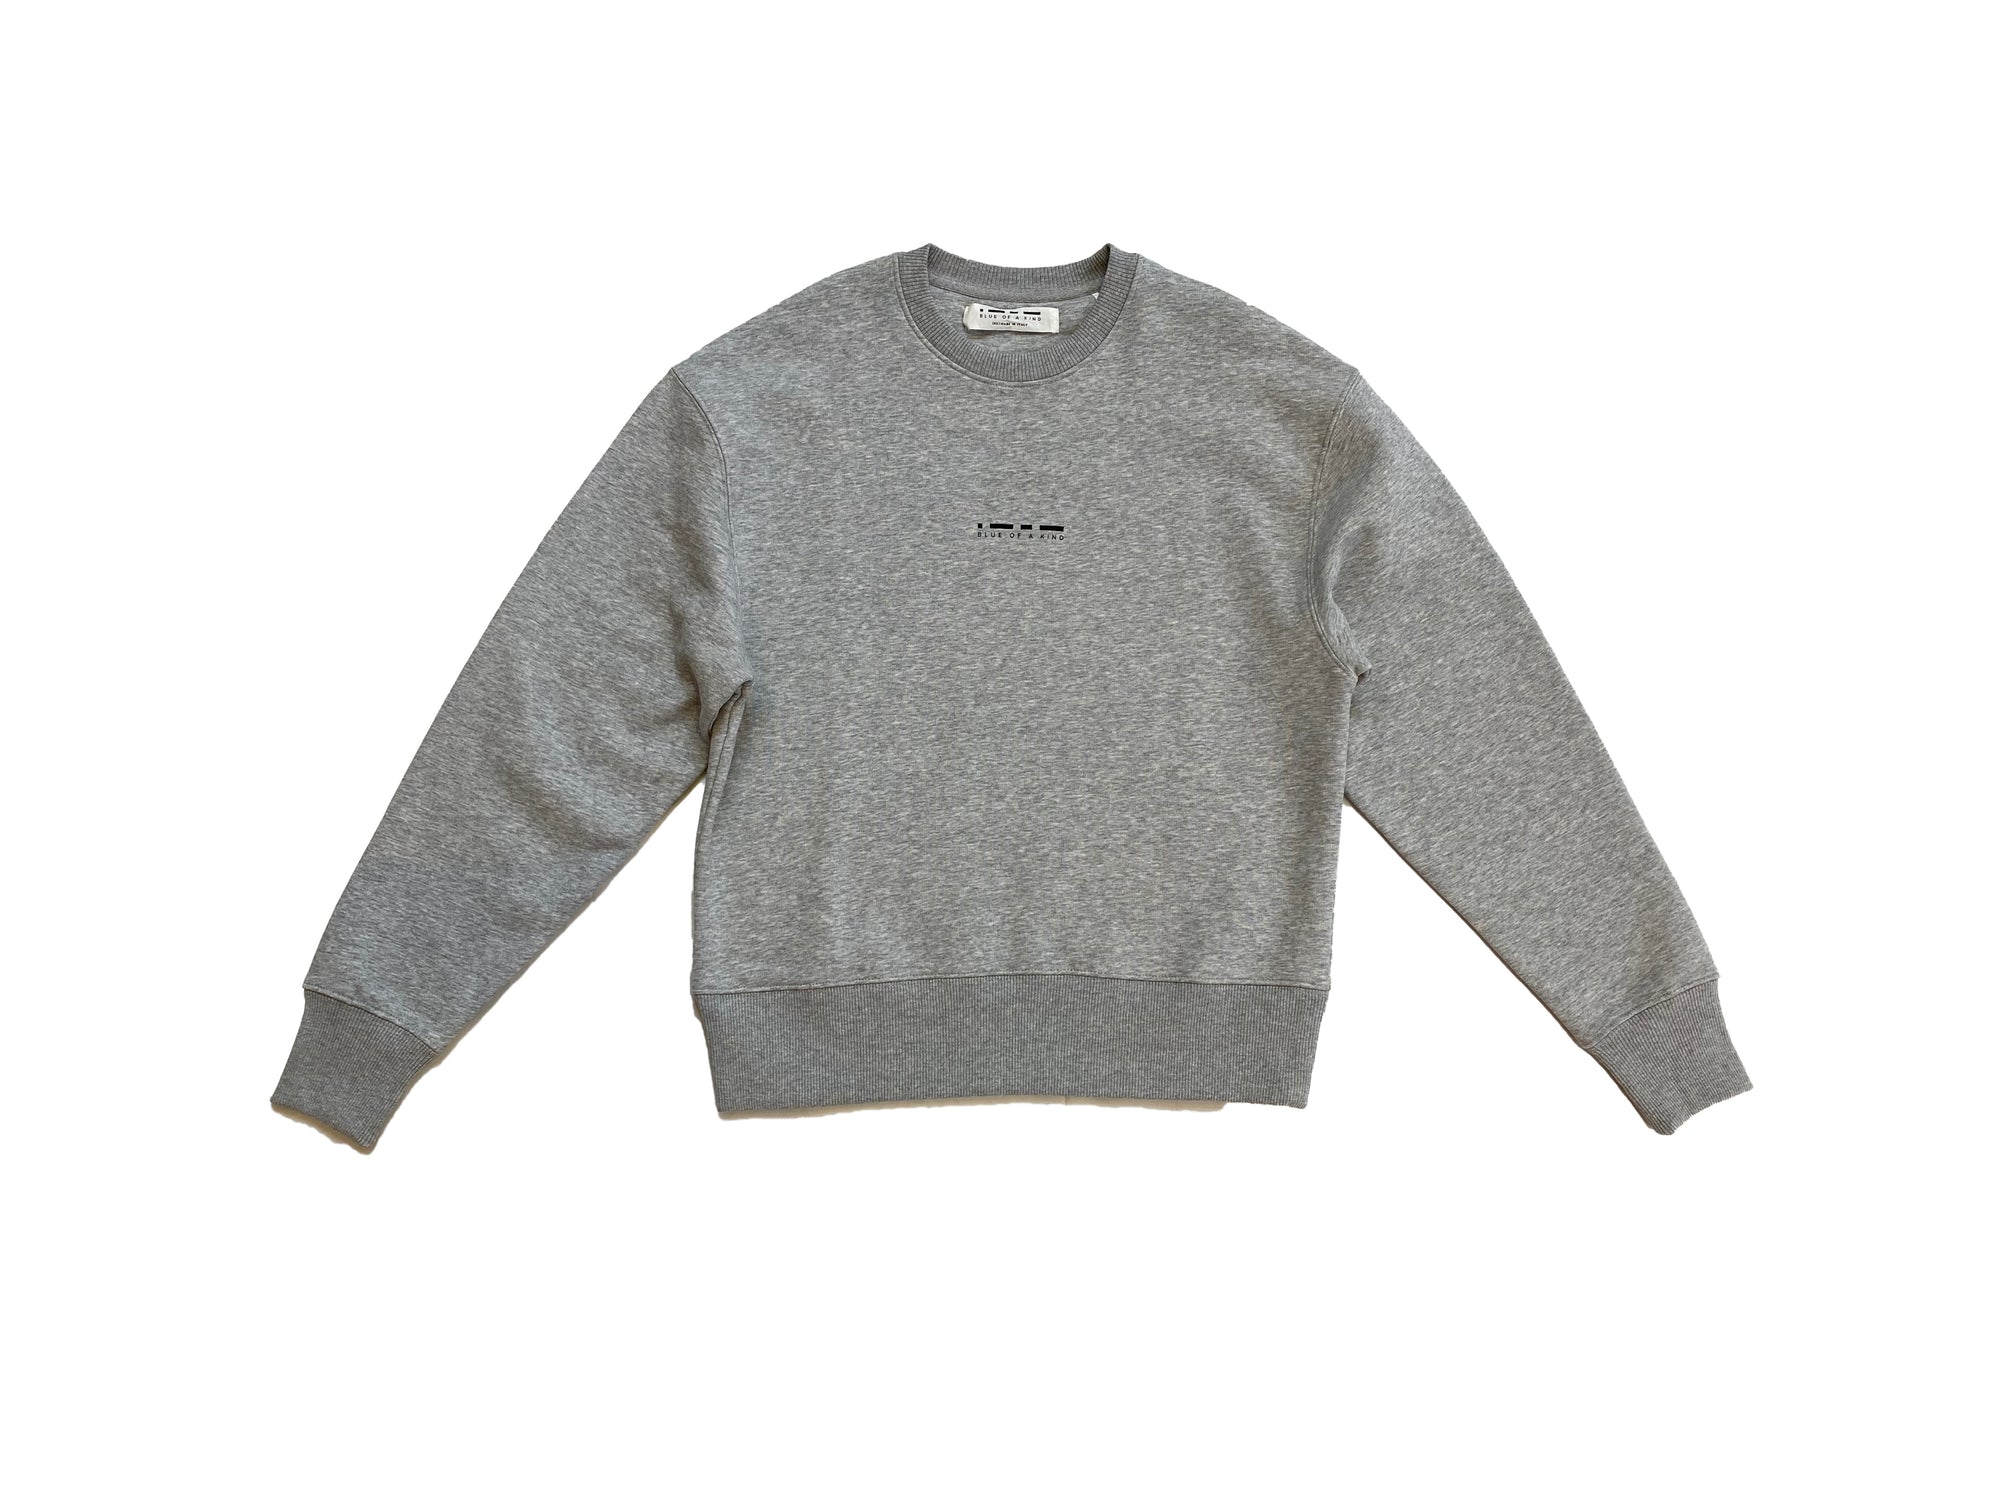 Cuni melange sweater - responsible sourcing